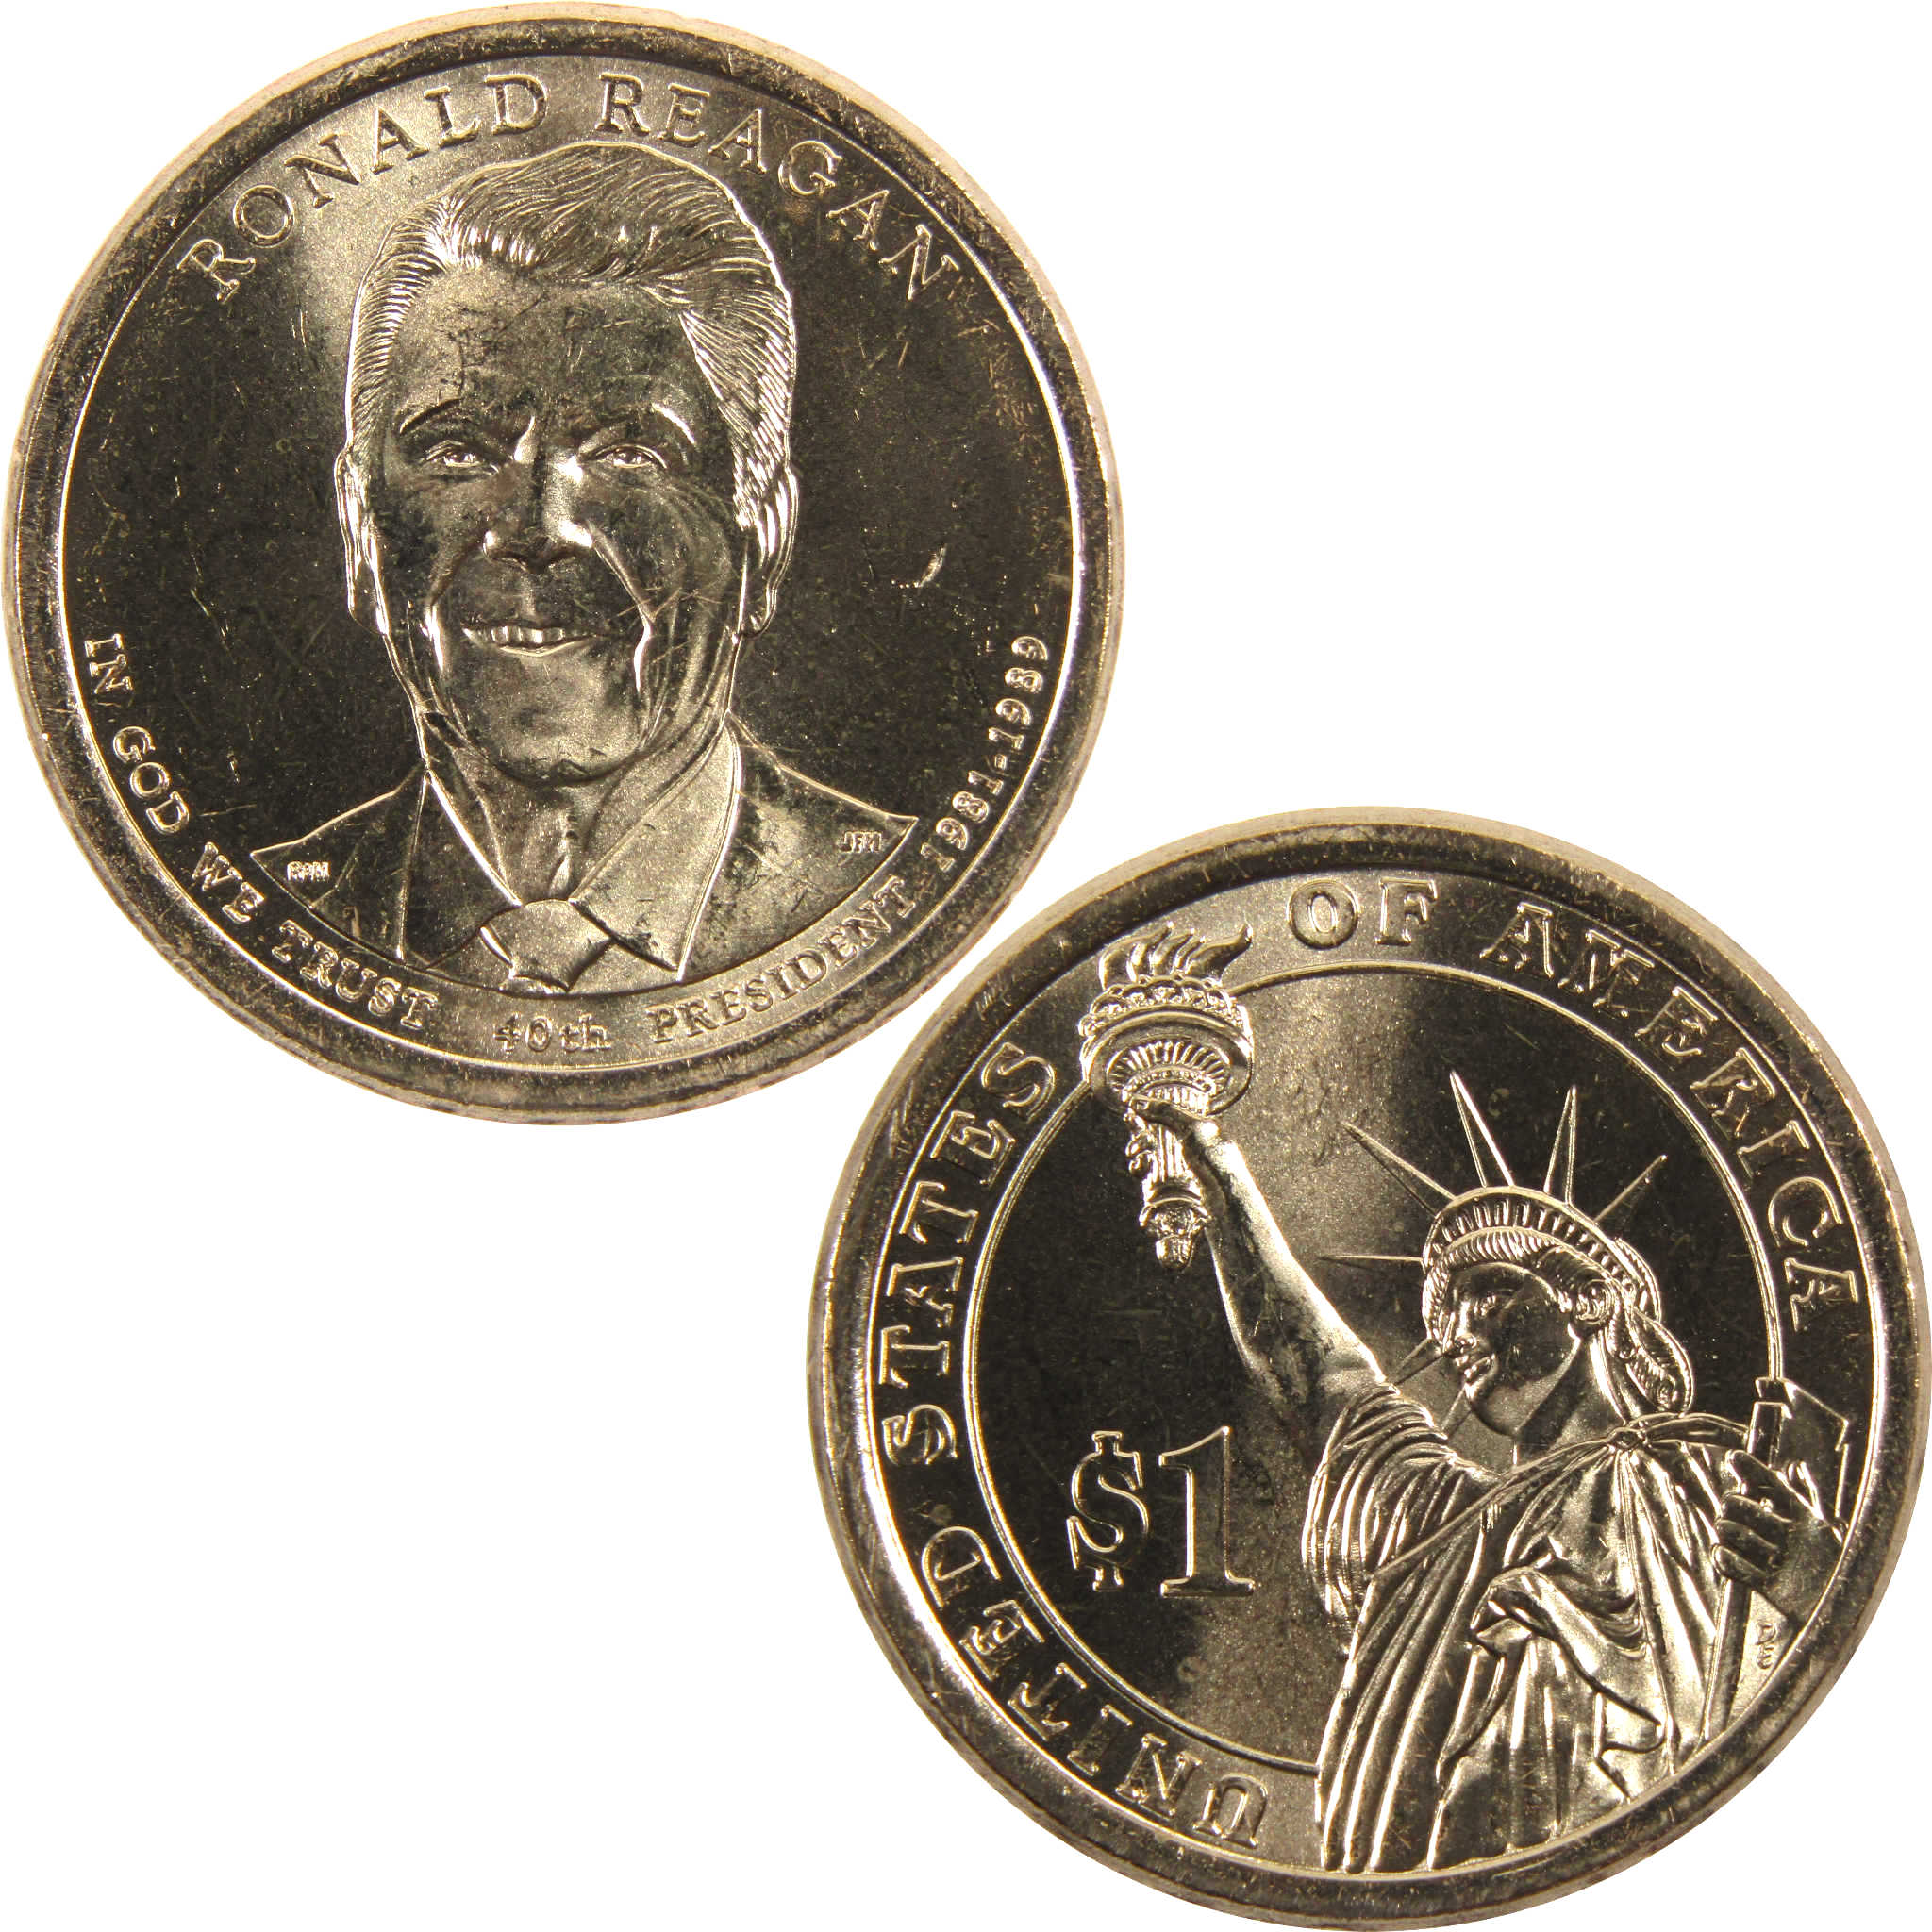 2016 P Ronald Reagan Presidential Dollar BU Uncirculated $1 Coin